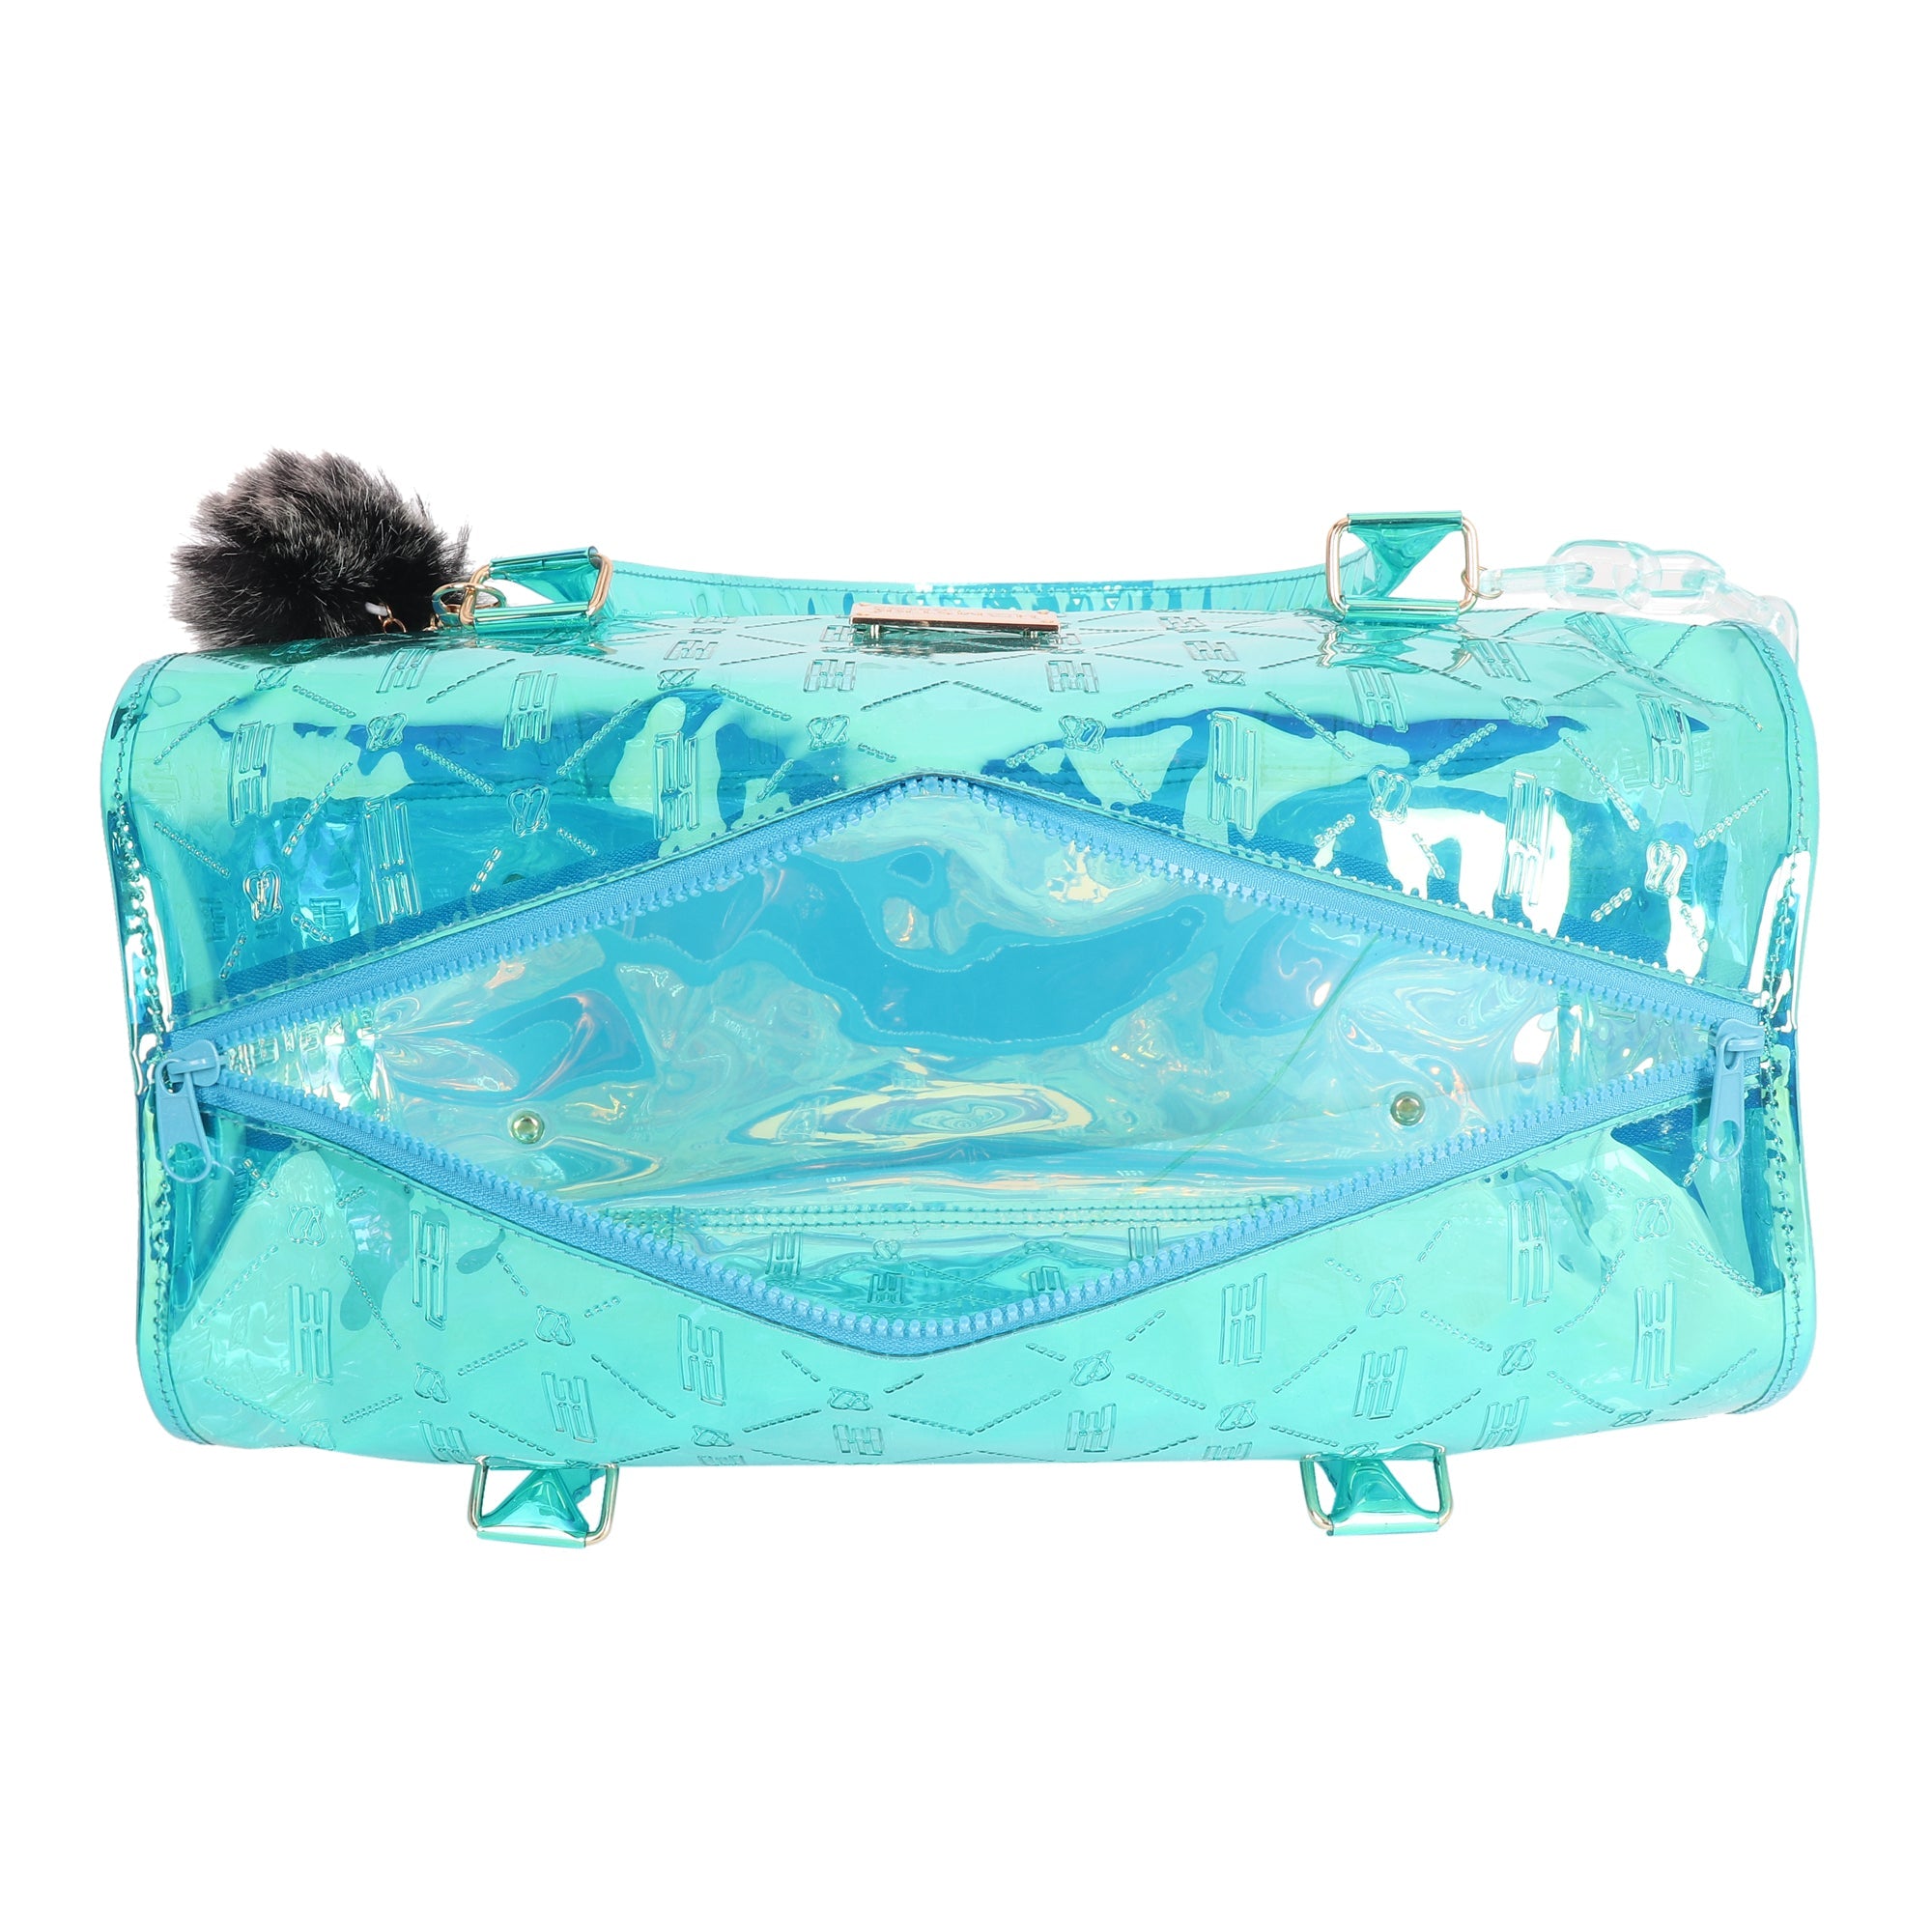 HL Raver Duffle Bag  Aqua Large Personalization